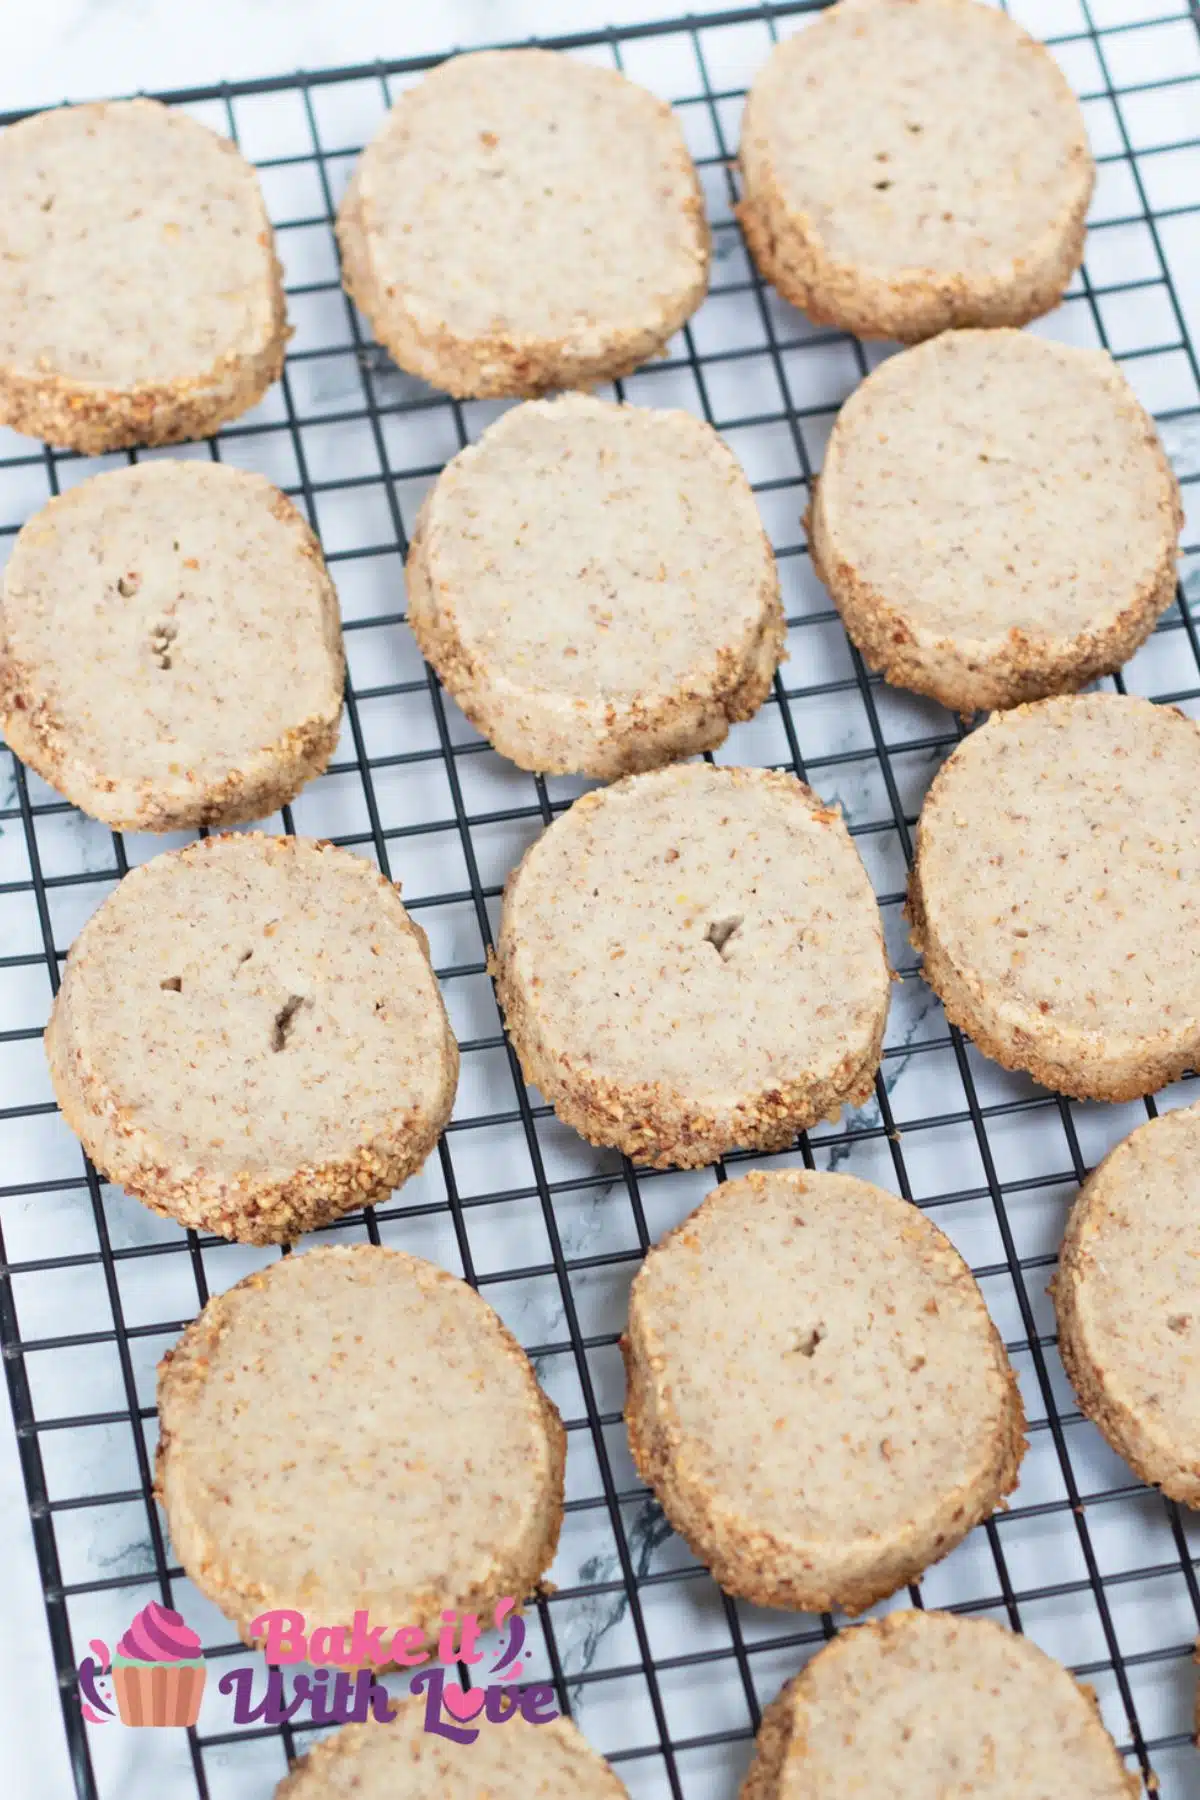 Best pecan sandies recipe to bake up tender, golden cookies like these pecan crusted cookies cooling on a wire rack.